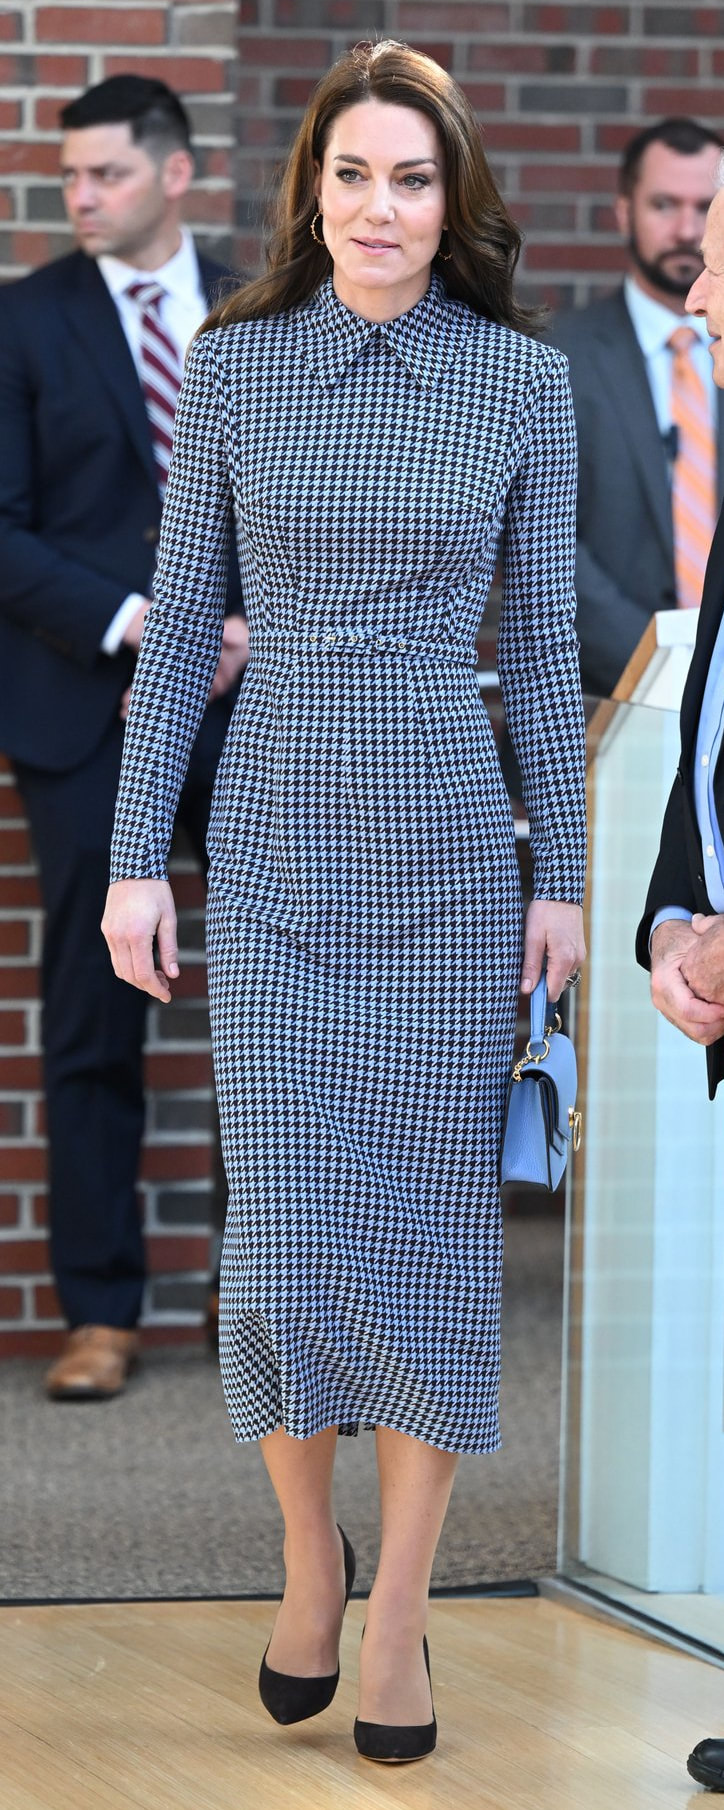 Lenique Louis Spine Hoop Earrings as seen on Kate Middleton, Princess of Wales.